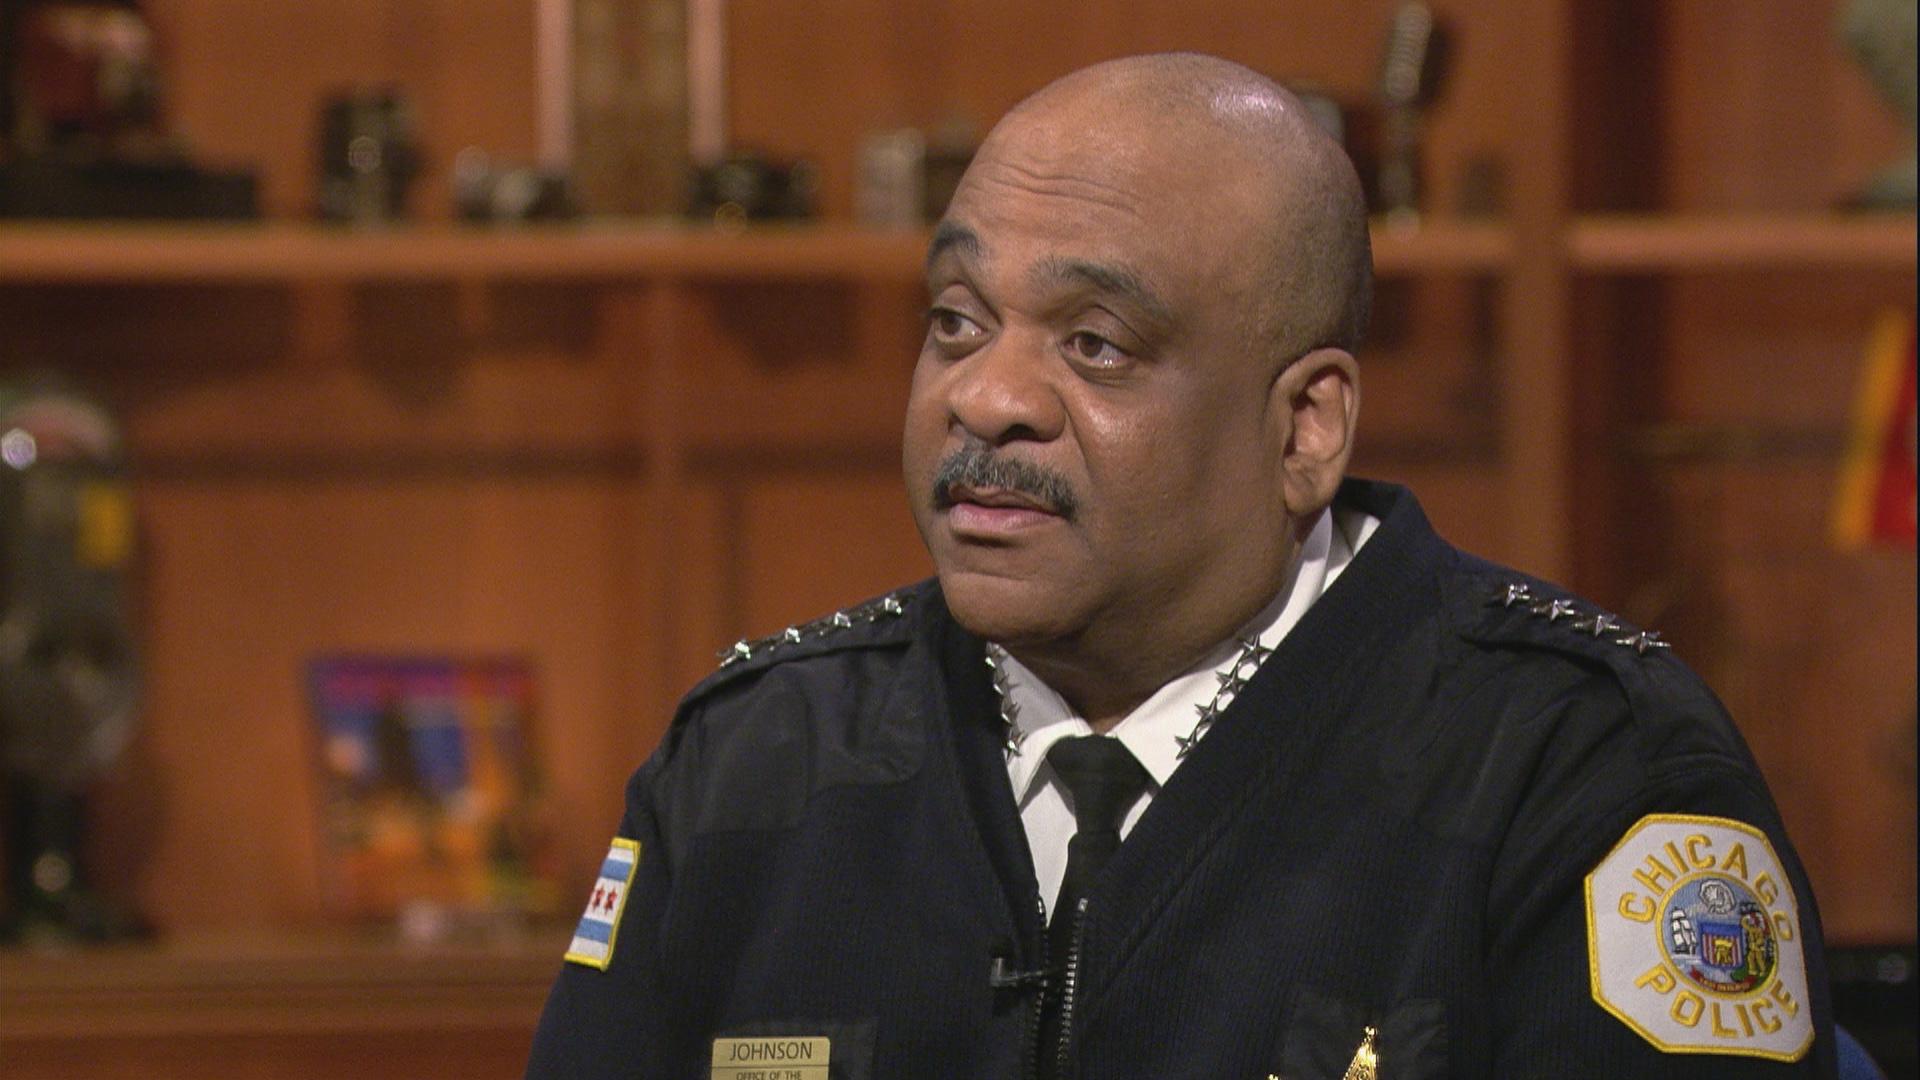 Chicago Police Superintendent Eddie Johnson appears on “Chicago Tonight” on Nov. 14, 2019. (WTTW News)